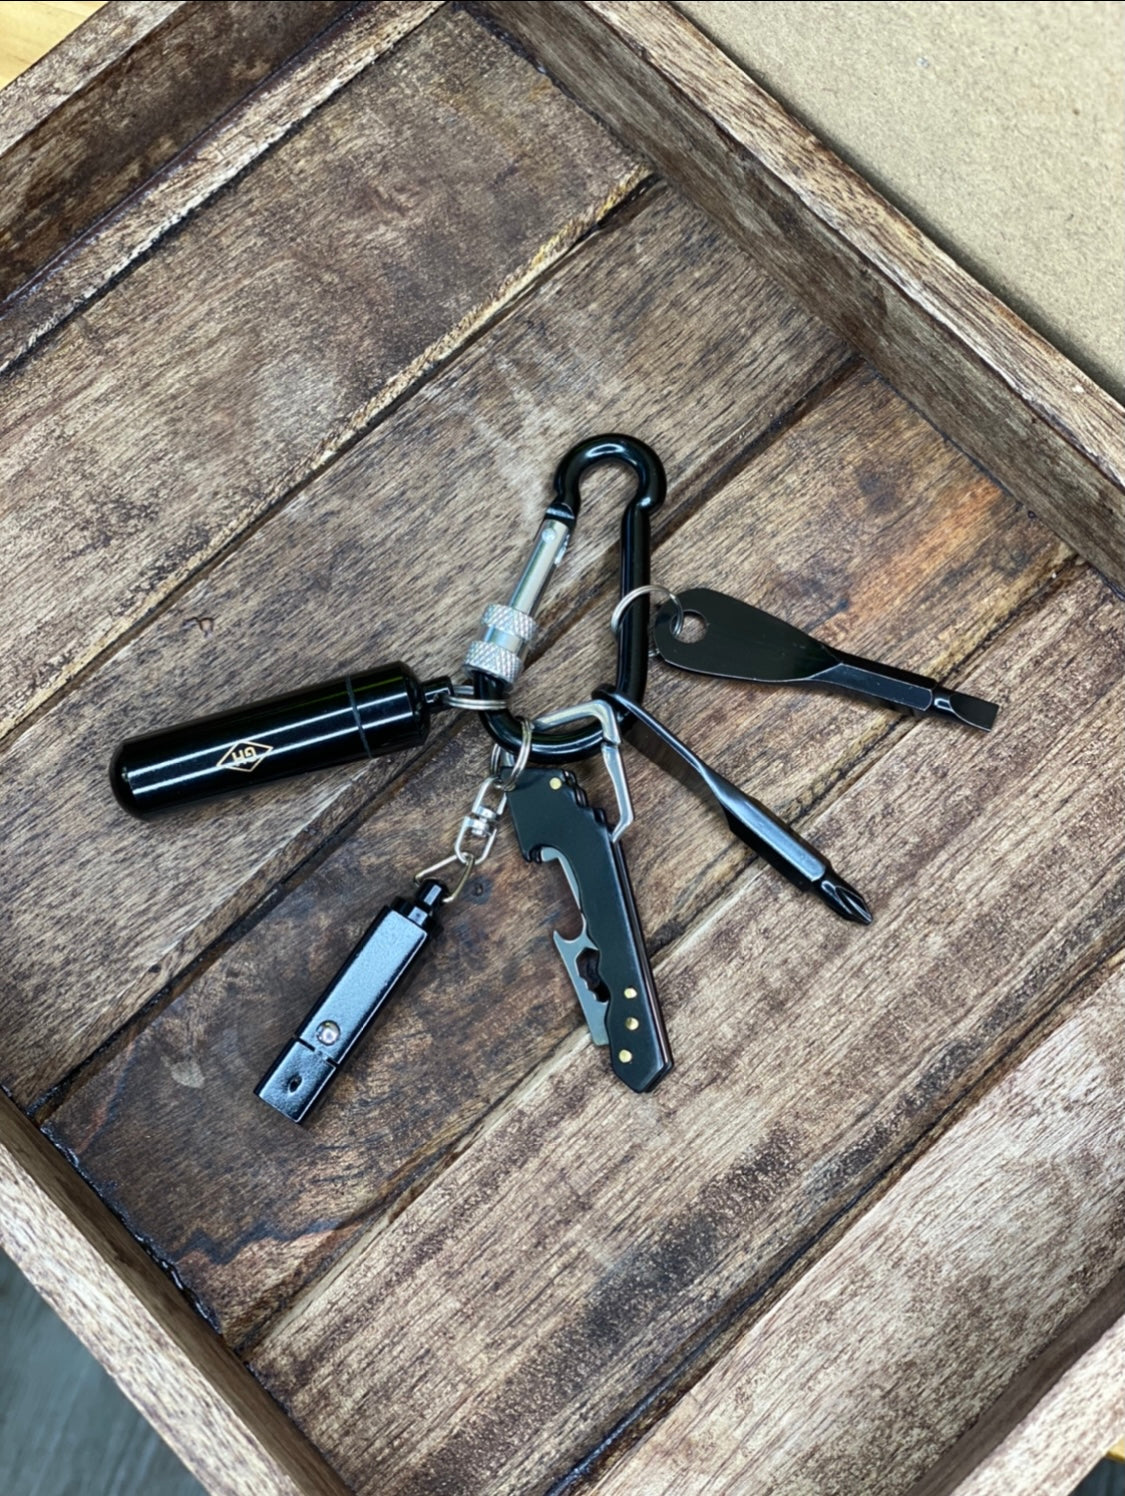 Keychain tool kit